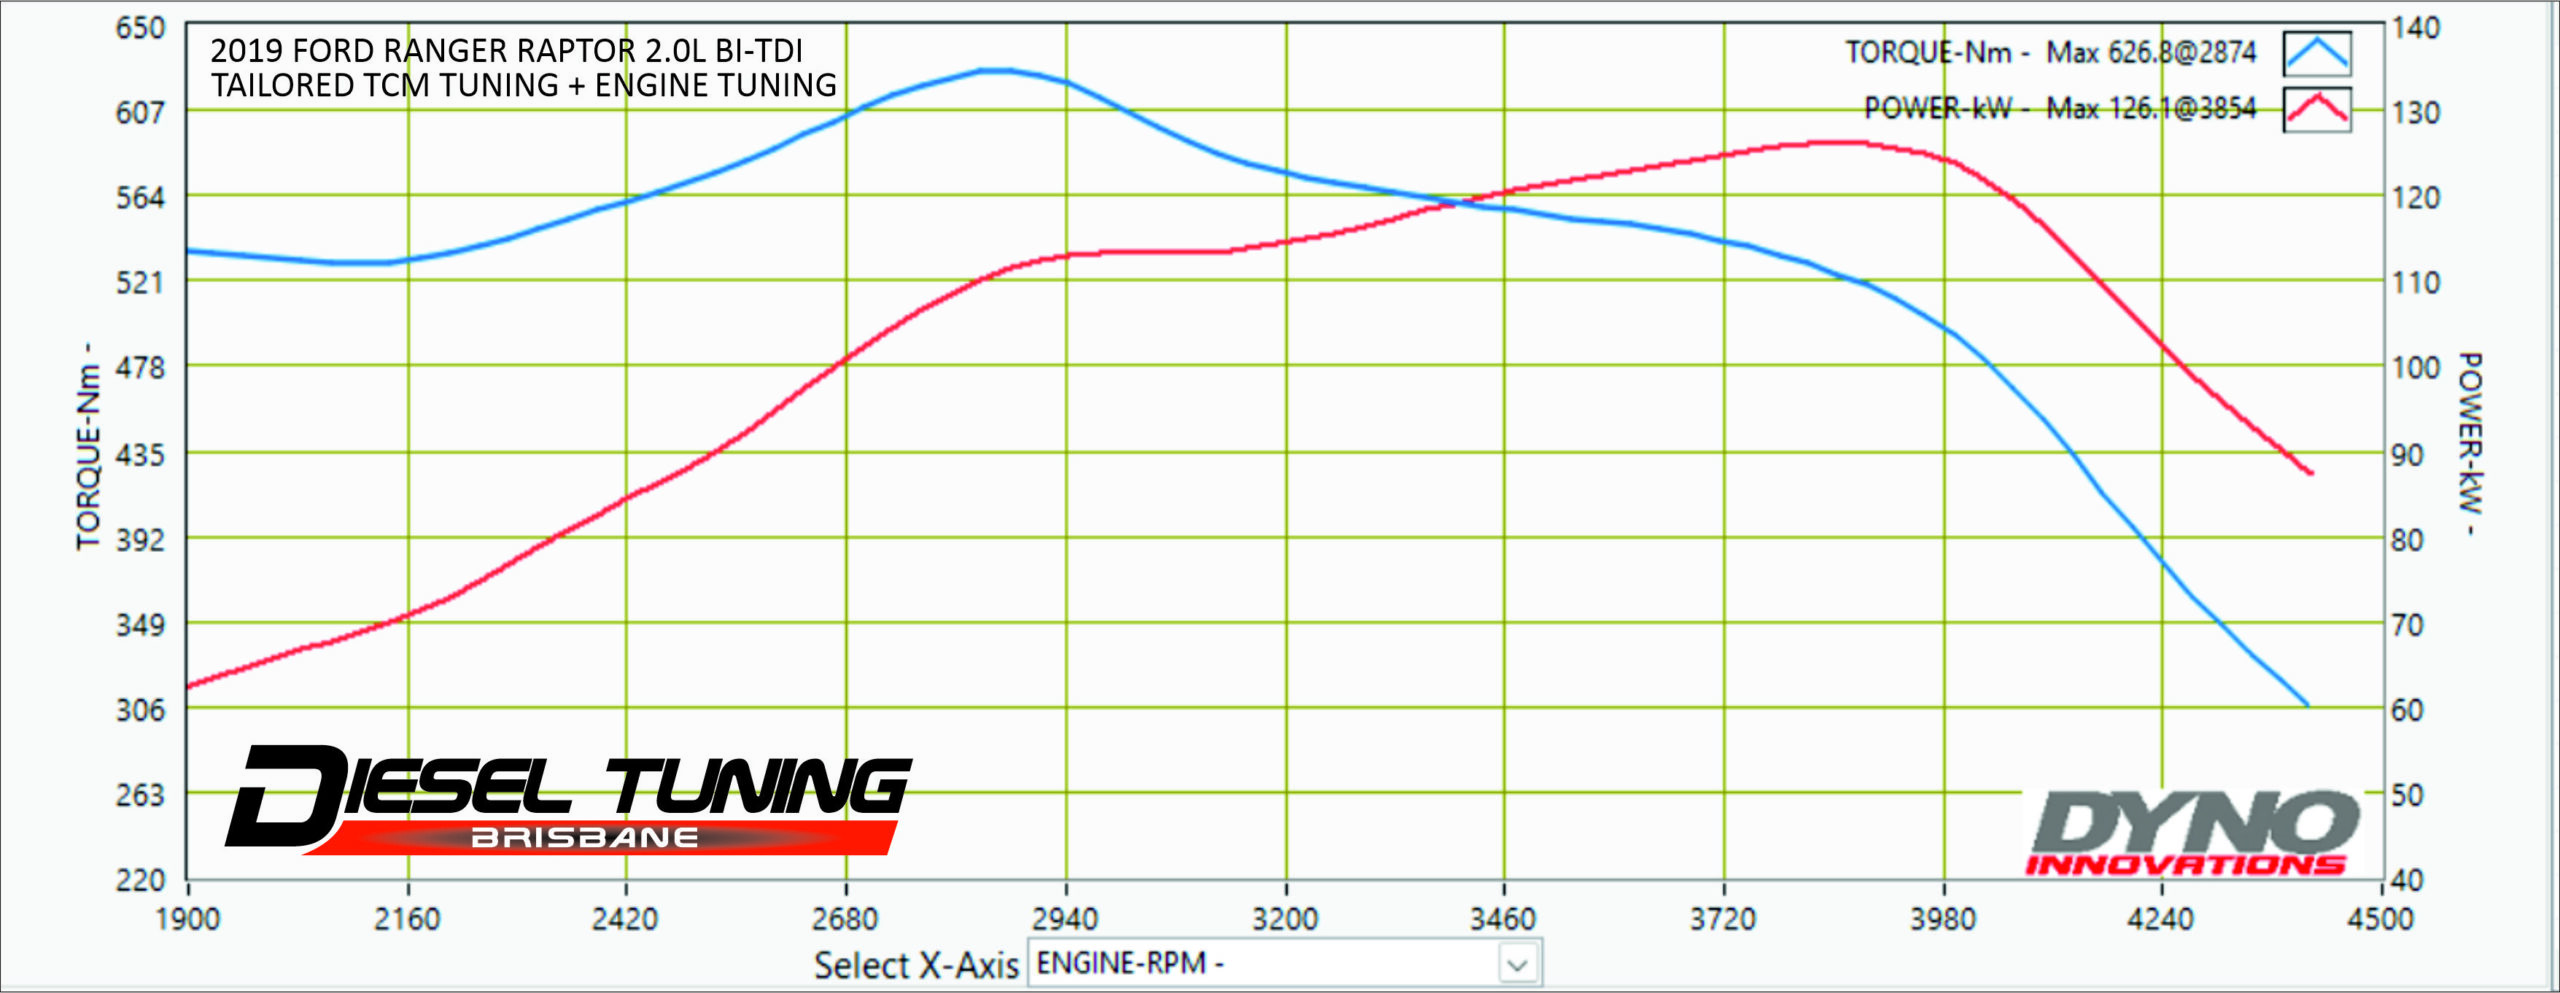 FORD RANGER RAPTOR 2.0L BI-TDI ECM + ENGINE TUNING DIESEL TUNING BRISBANE